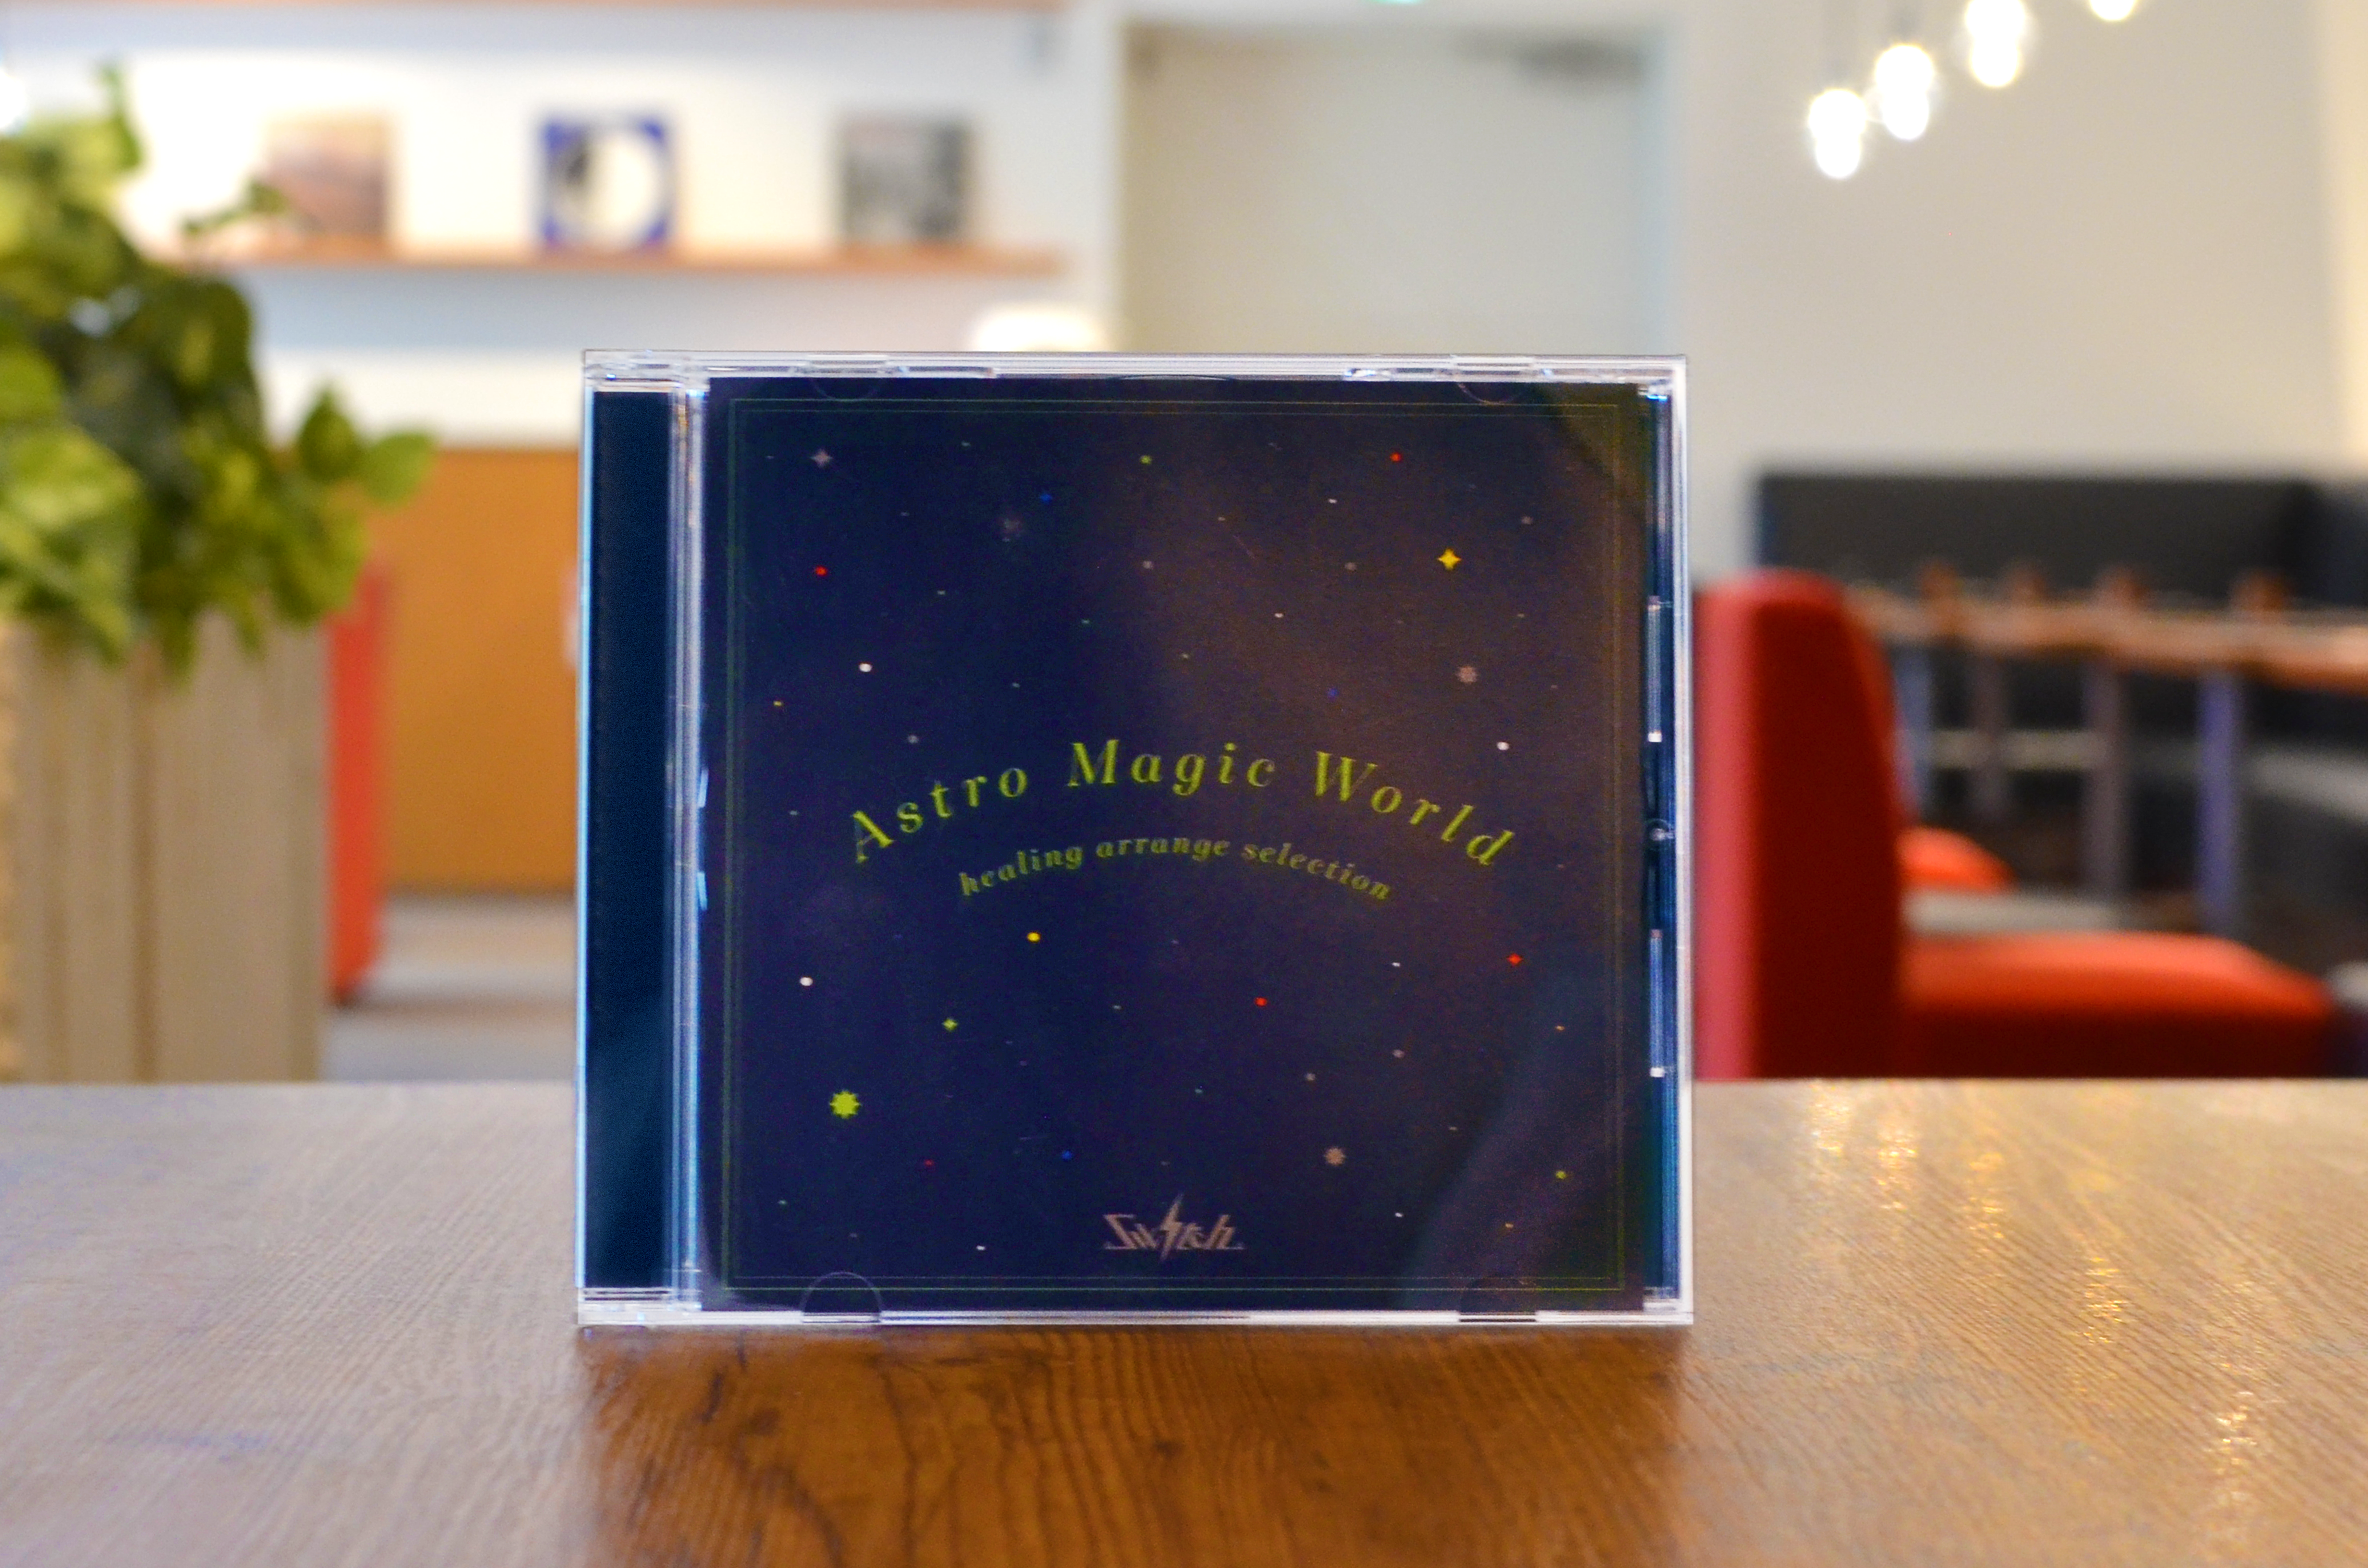 Astro Magic World healing arrange selection